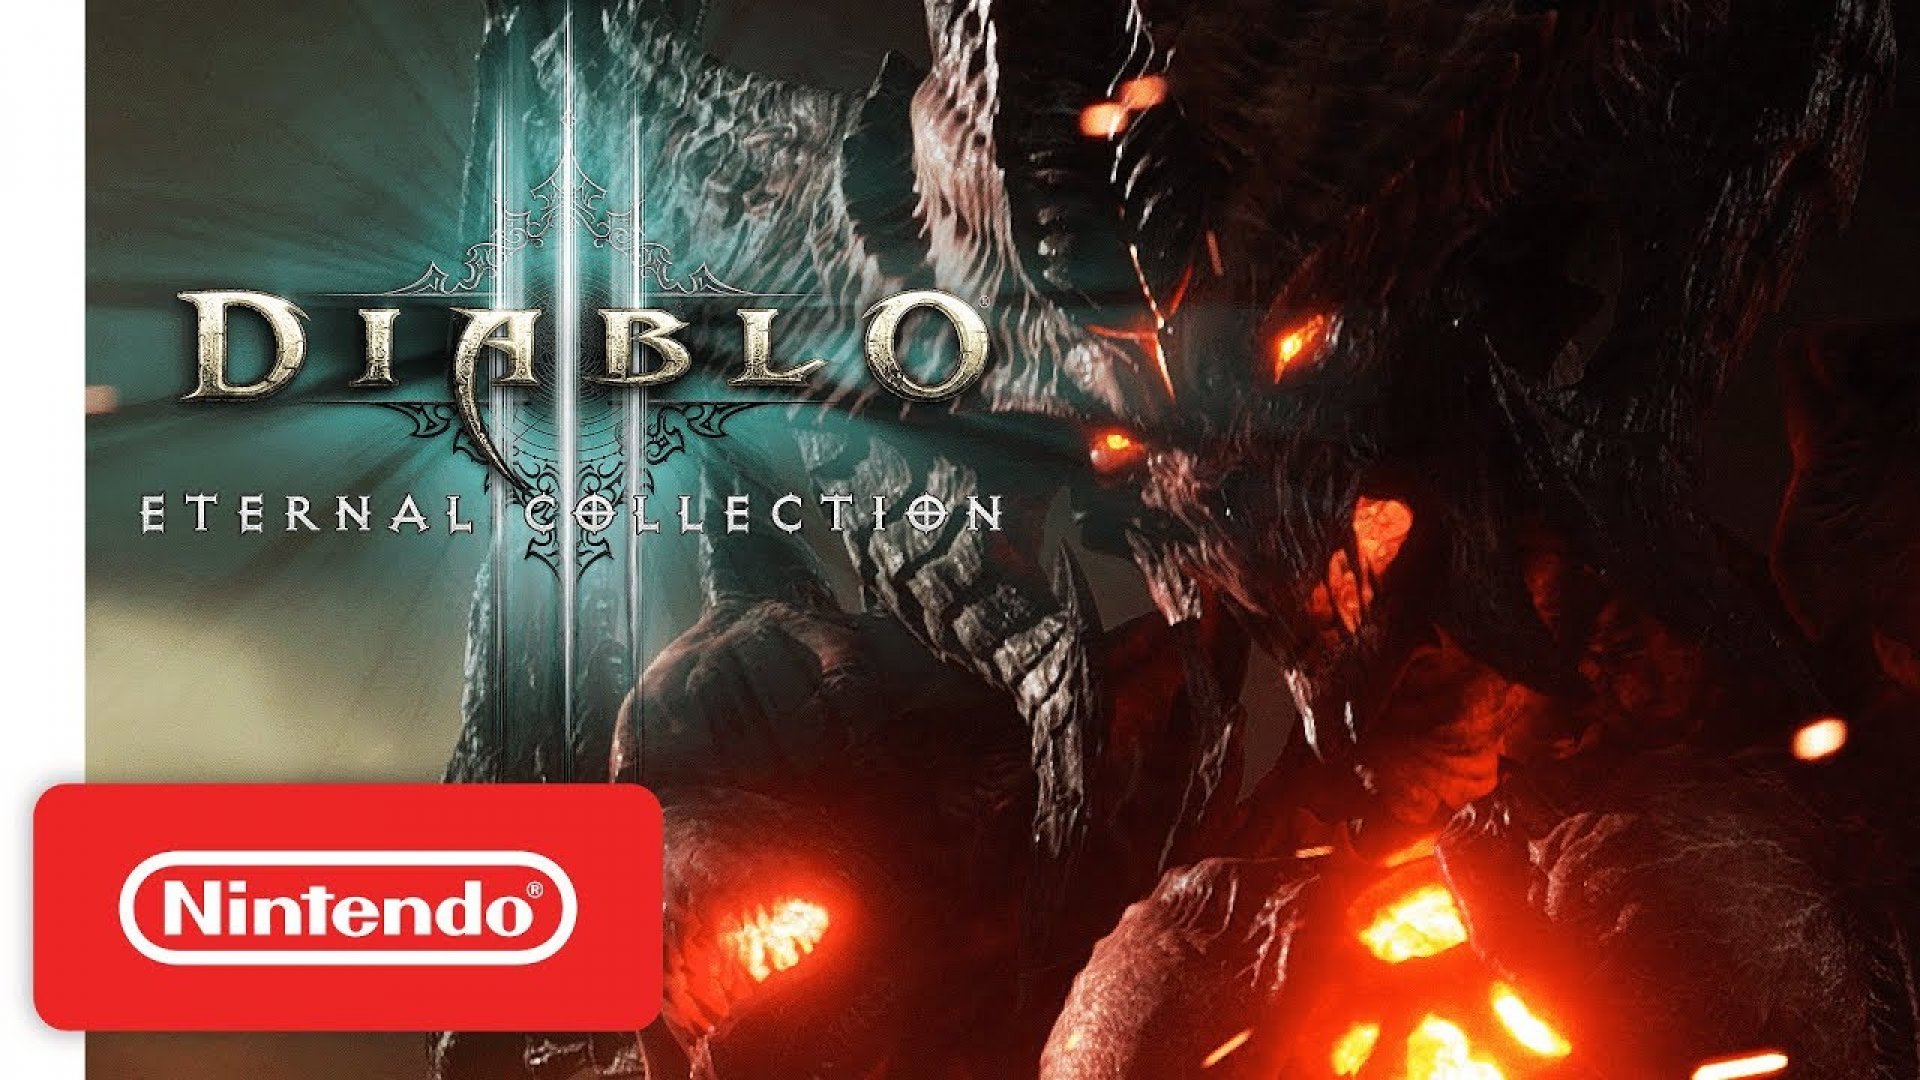 Diablo 3 nintendo. Diablo 3 Eternal collection (Nintendo Switch) обложка. Диабло 3 Нинтендо. Diablo 3 Eternal collection Nintendo Switch Скриншот. Diablo III: Eternal collection Нинтендо обложка.